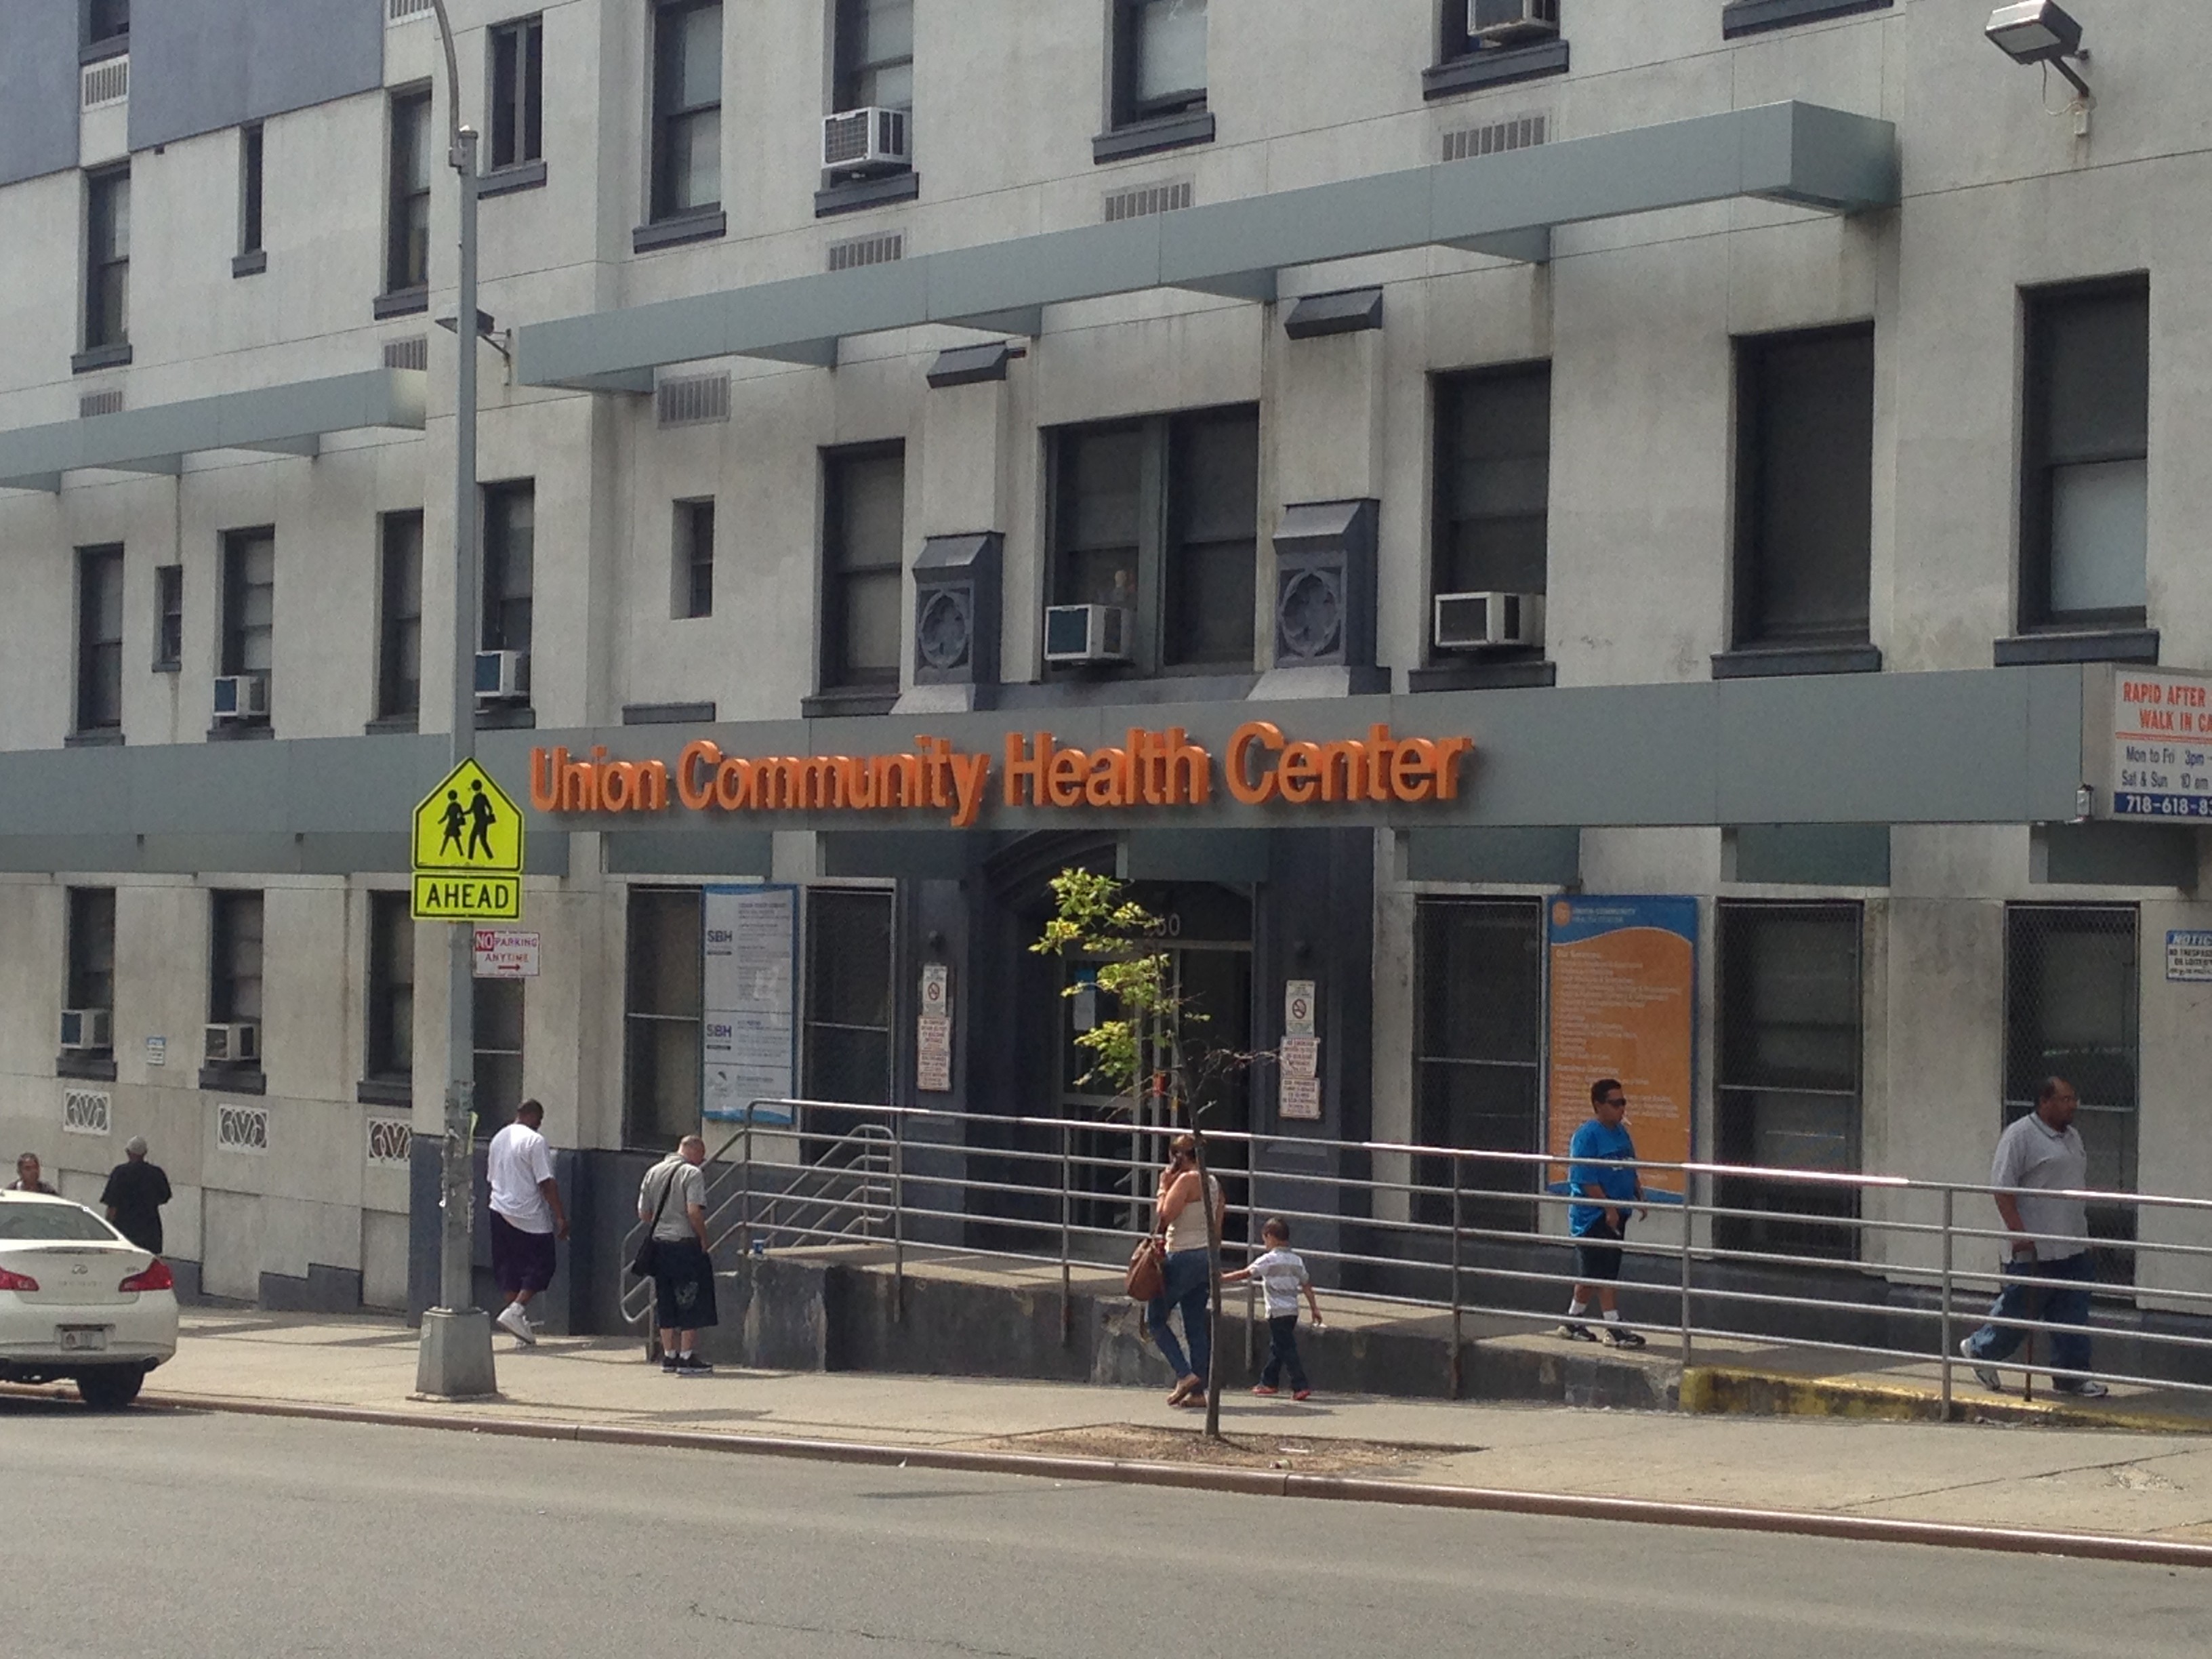 Union Community Health Center - Quarry Road